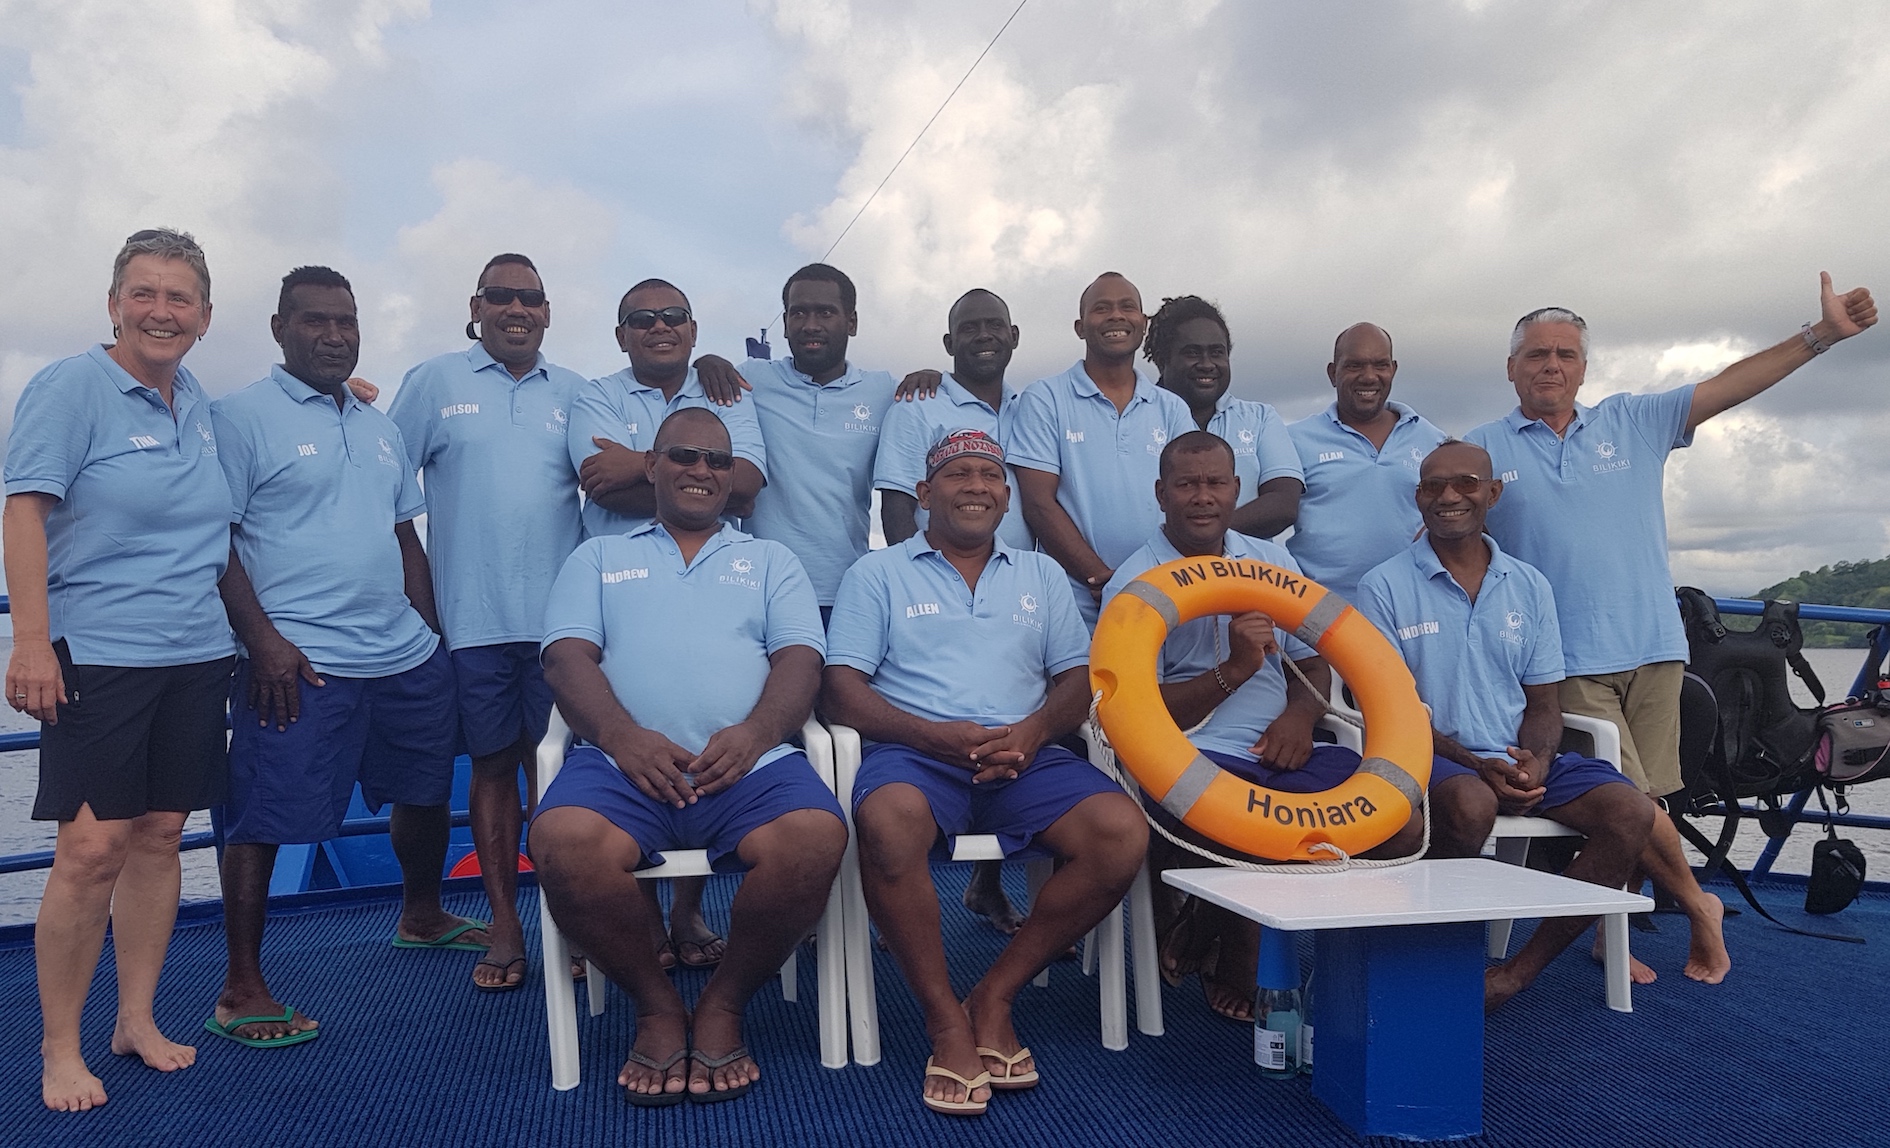 Group photo of all of the Bilikiki crew, Solomon Islands. 